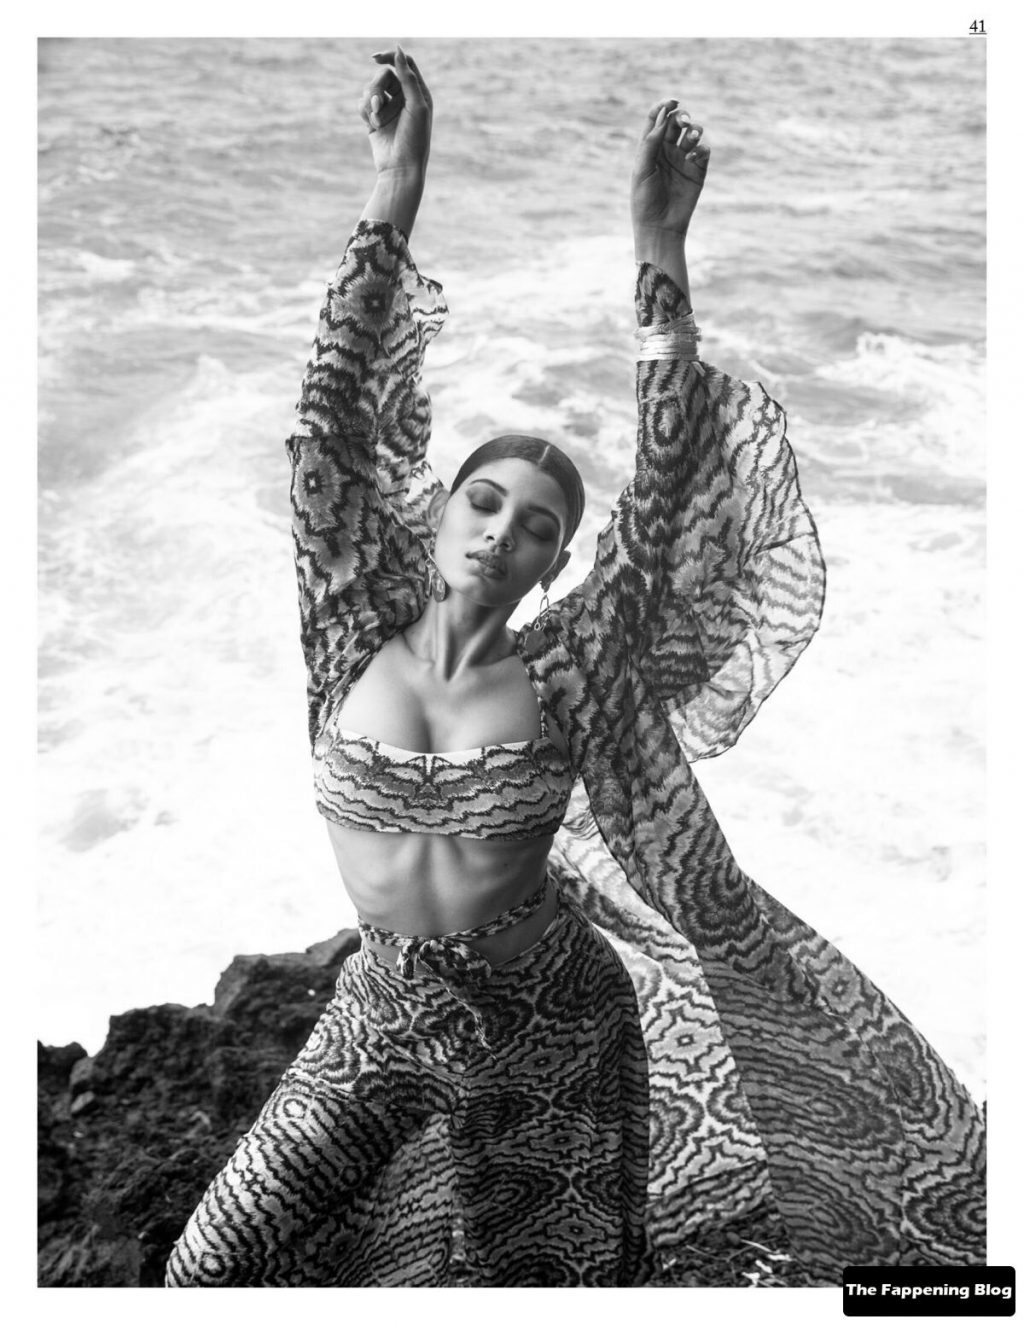 Danielle Herrington Sexy &amp; Topless – Aurelius Magazine Spring 2021 Issue (30 Photos)